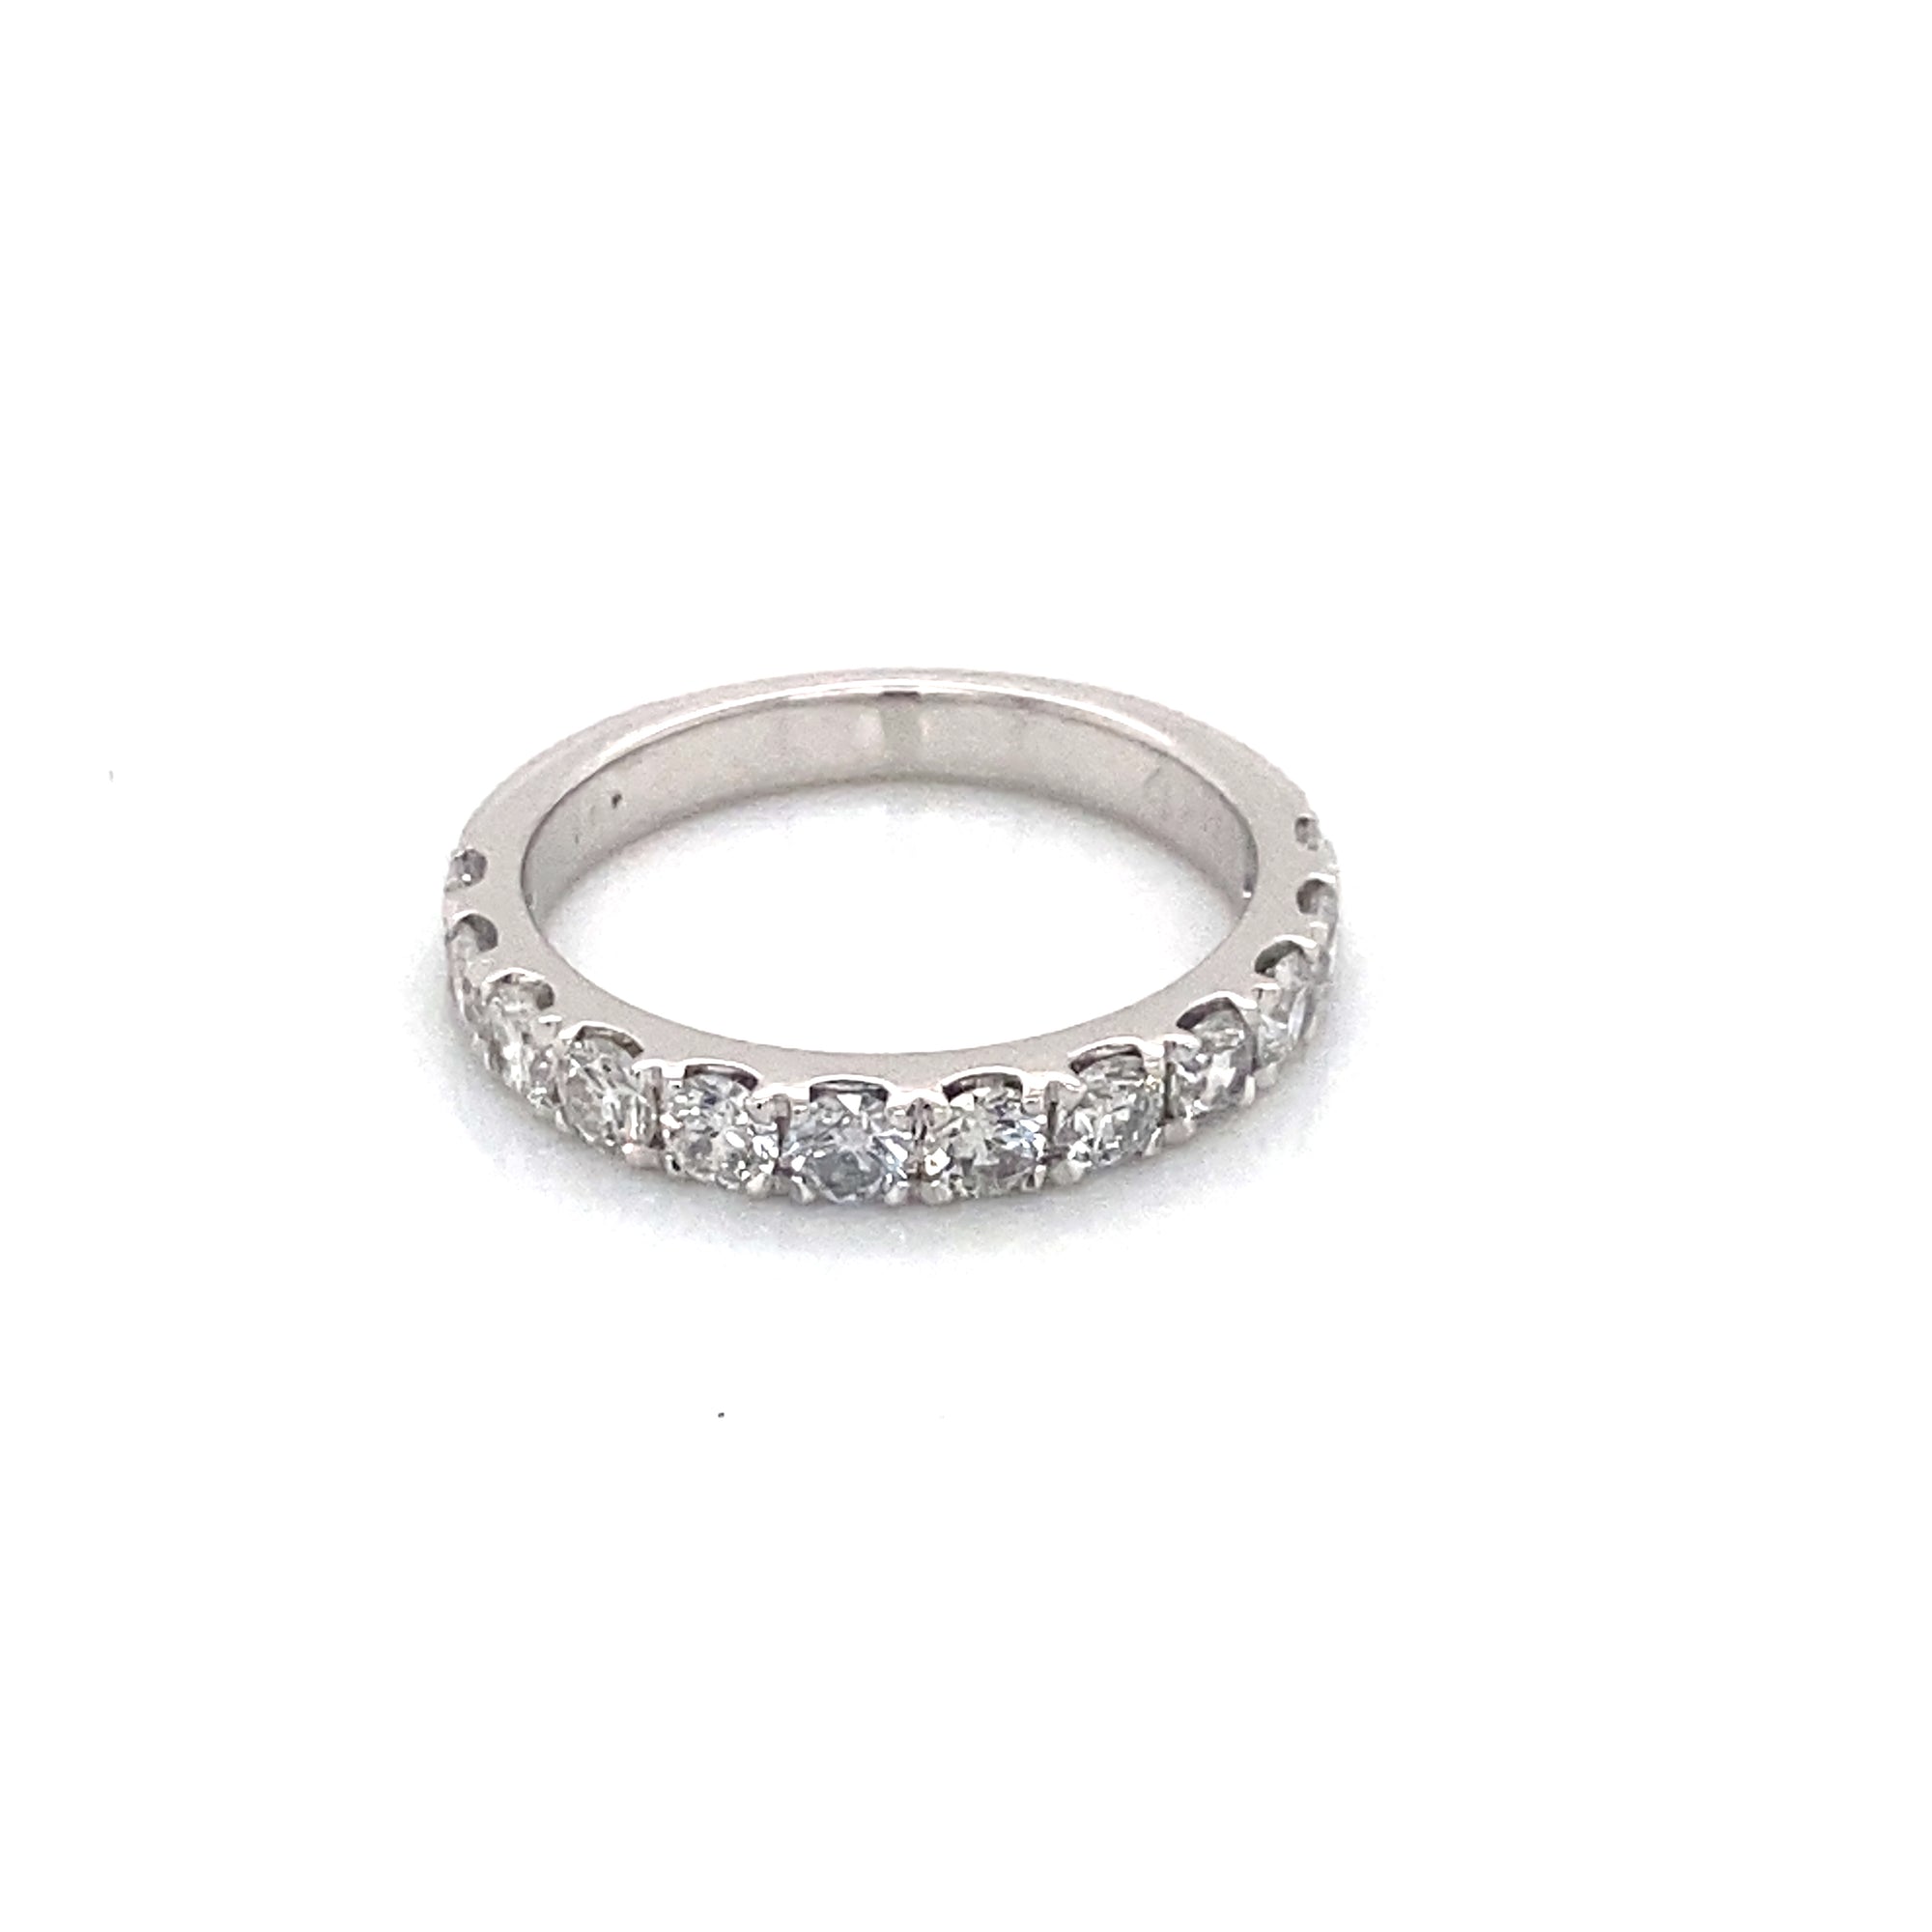 14K White Gold Diamond Wedding Ring with 0.97ct Total Diamond Weight